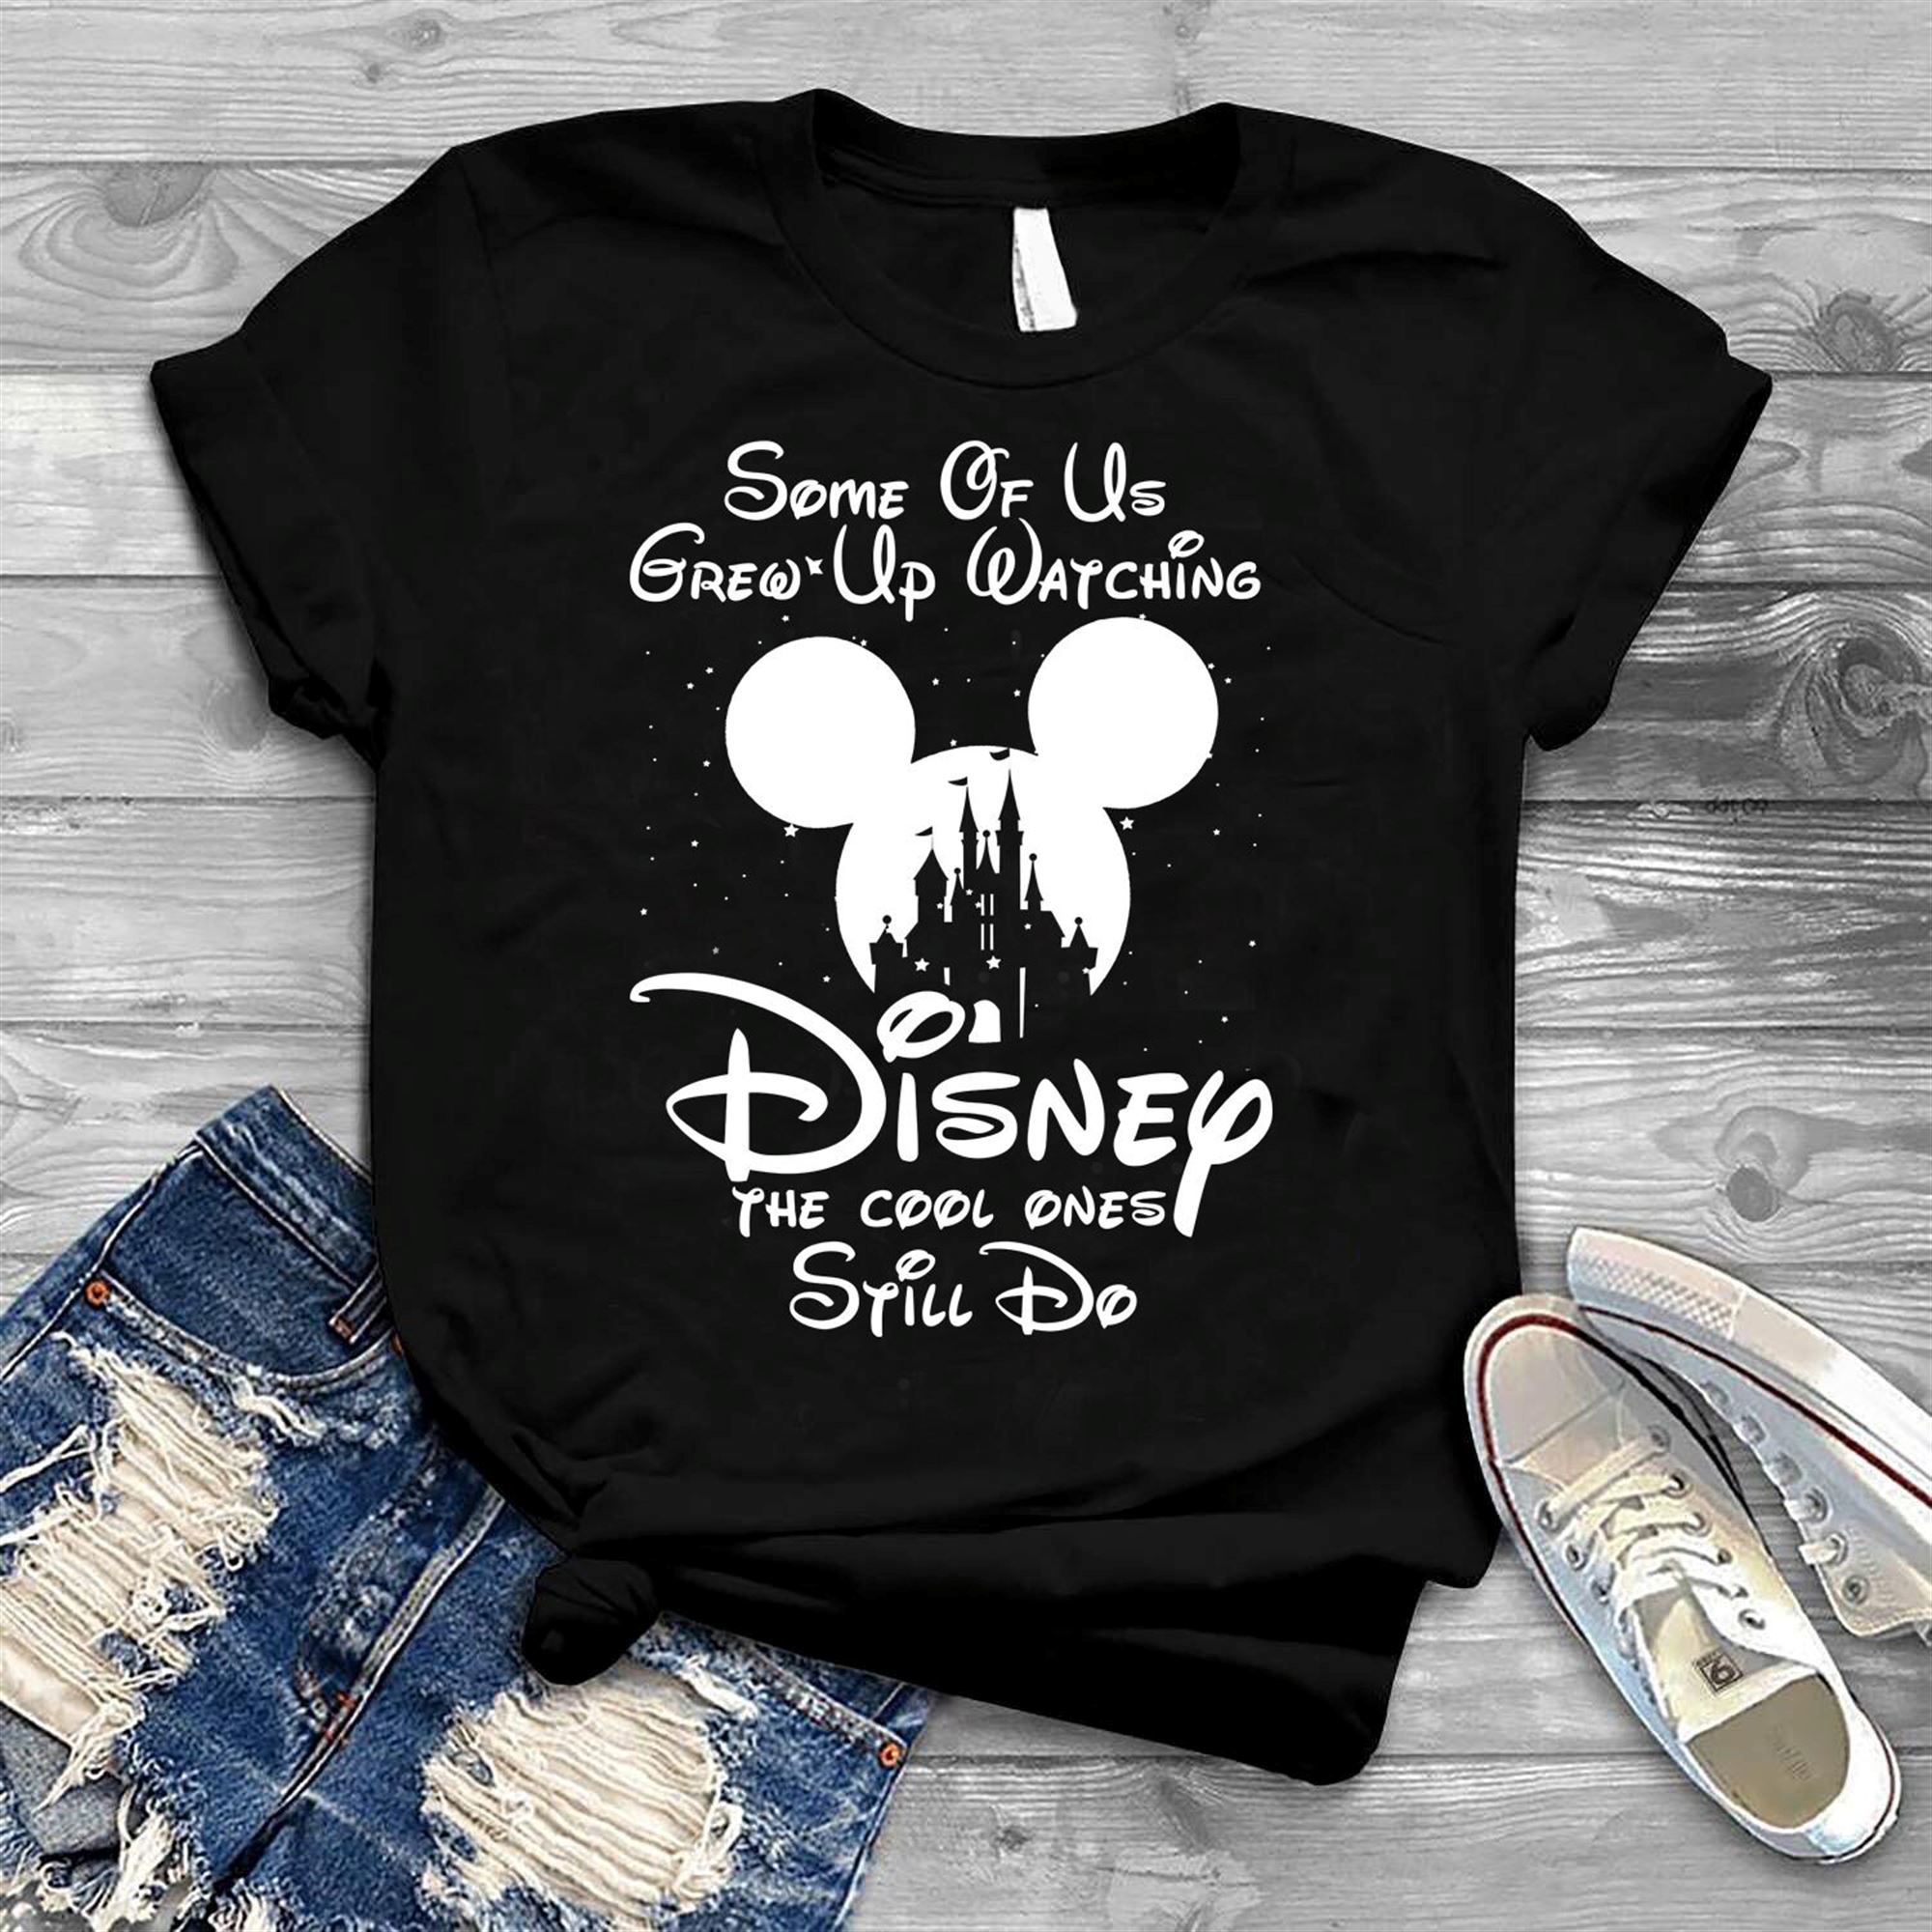 Disney Shirts For Women Disney World Shirts Disney Family Shirts Girls Trip Disney Shirts Disney World Shirts Disney Family Shirts